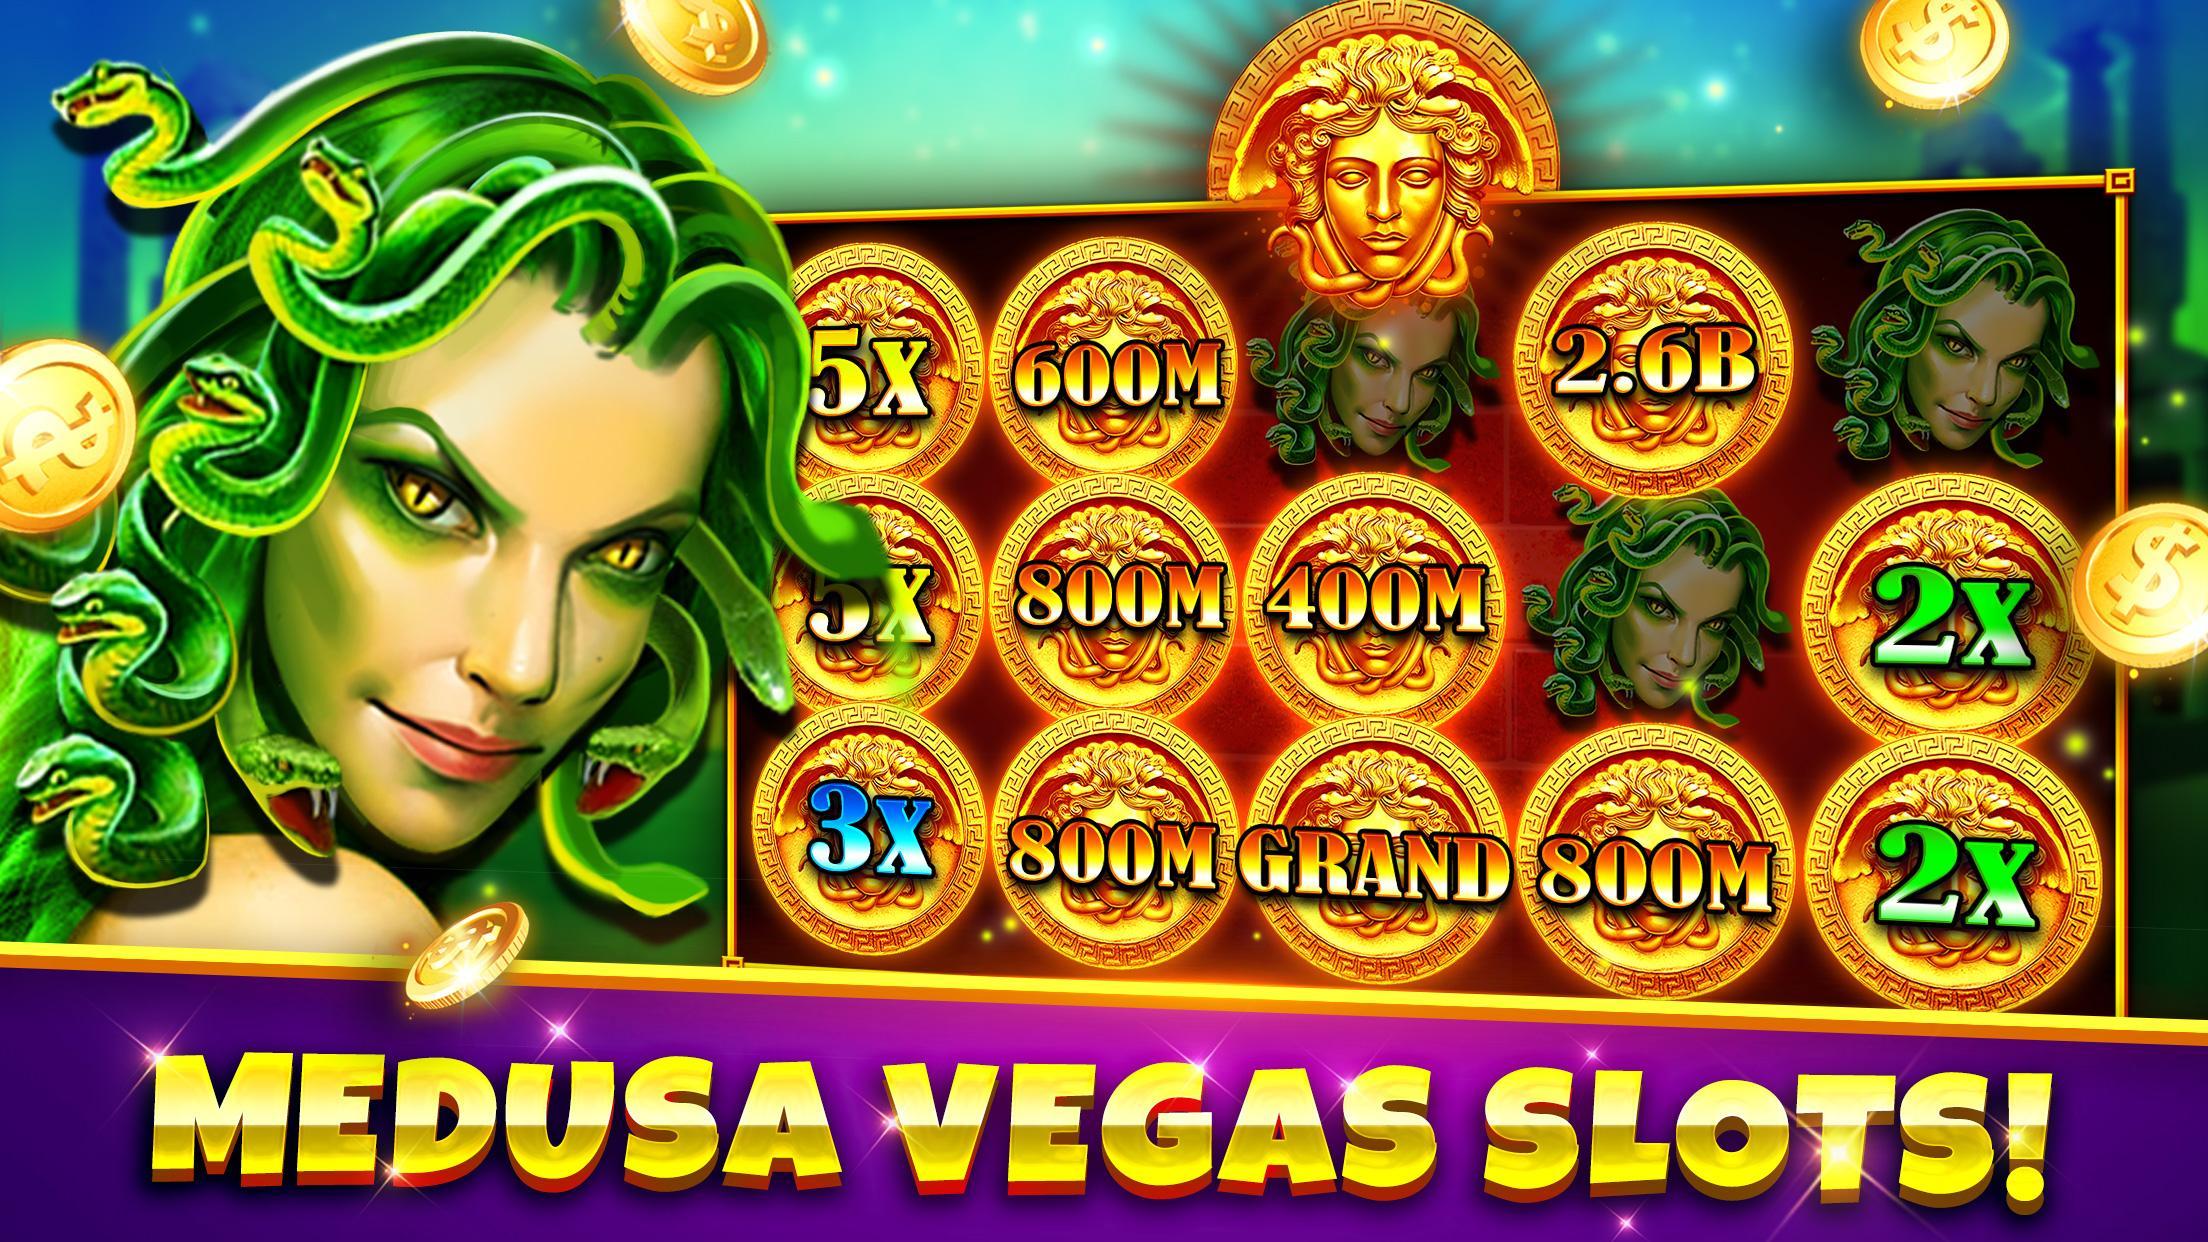 Tizona slot machine 2022 play for free online today